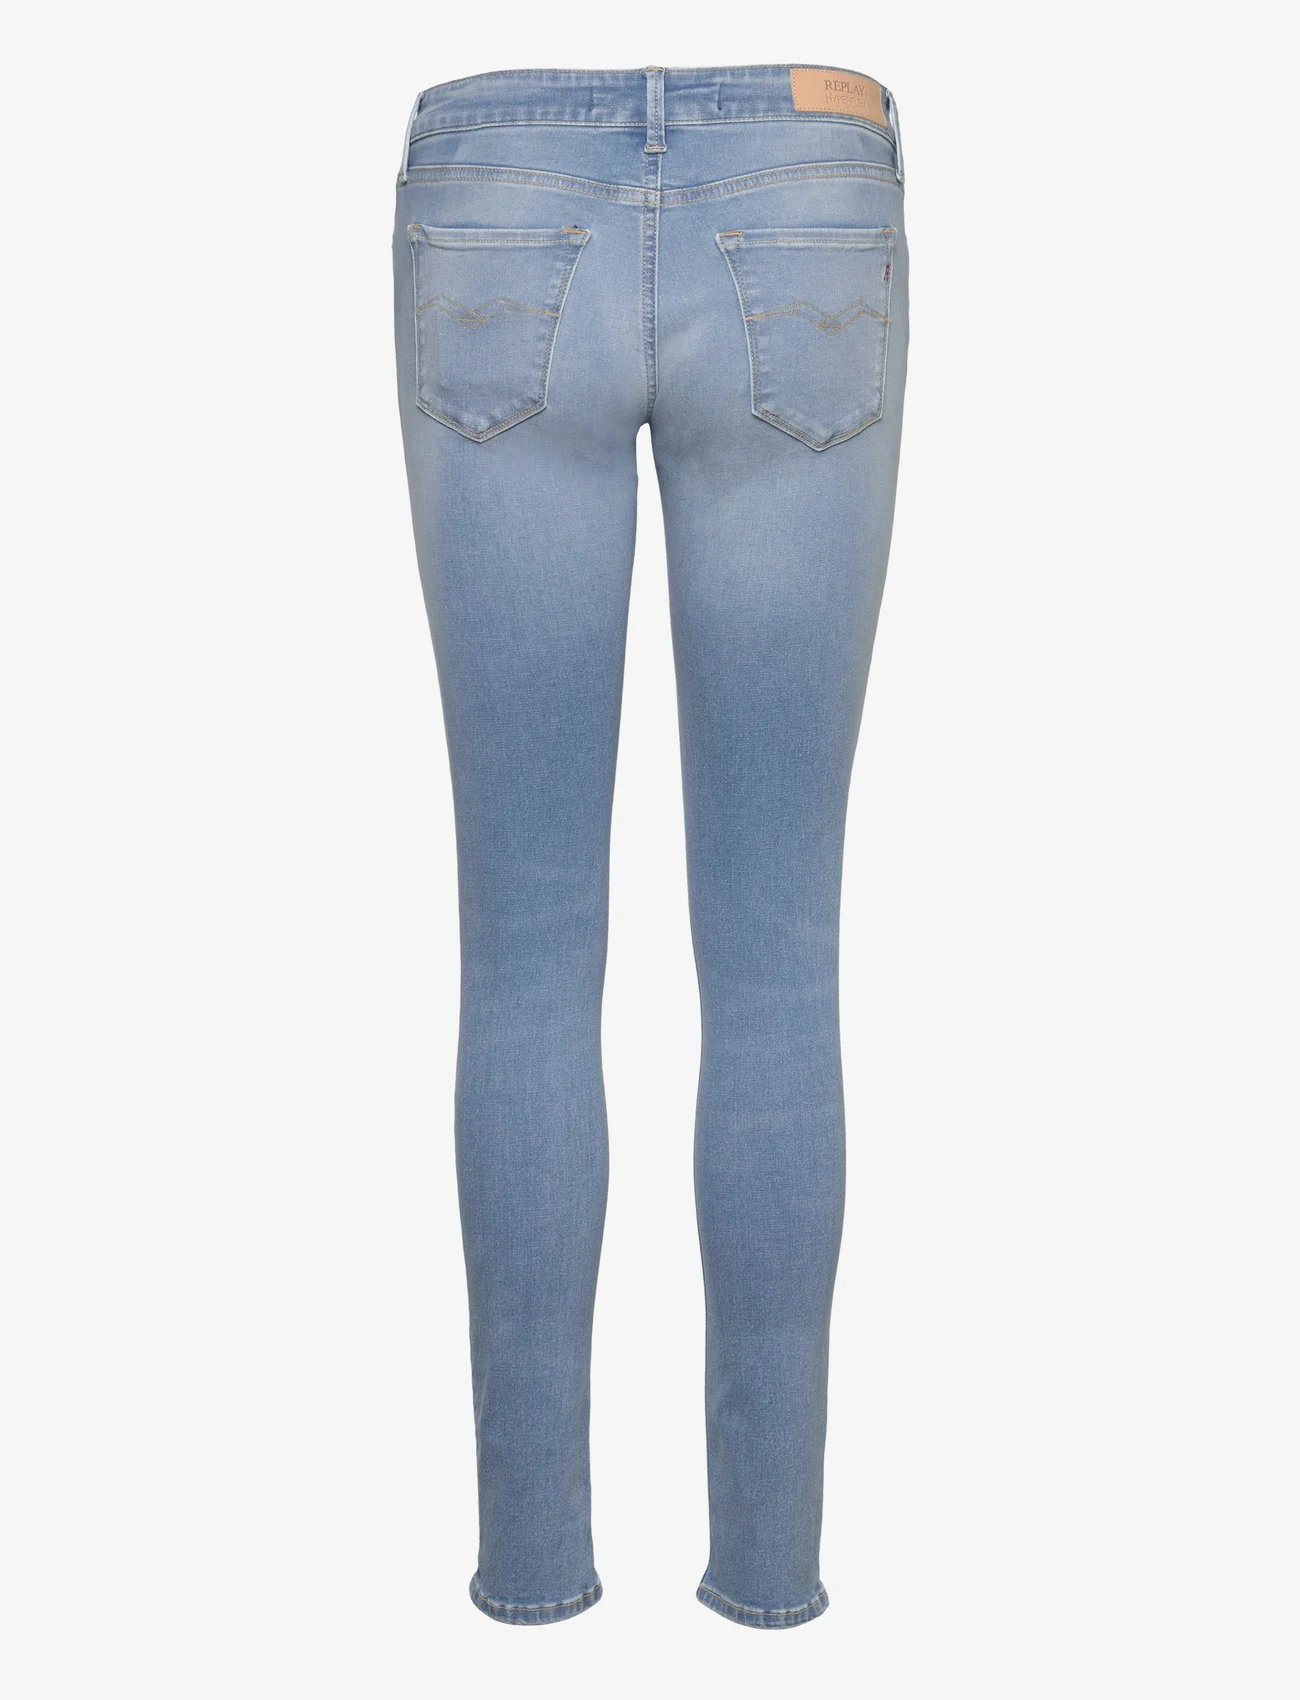 Replay - NEW LUZ Trousers SKINNY HYPERFLEX ORIGINAL - dżinsy skinny fit - blue - 1